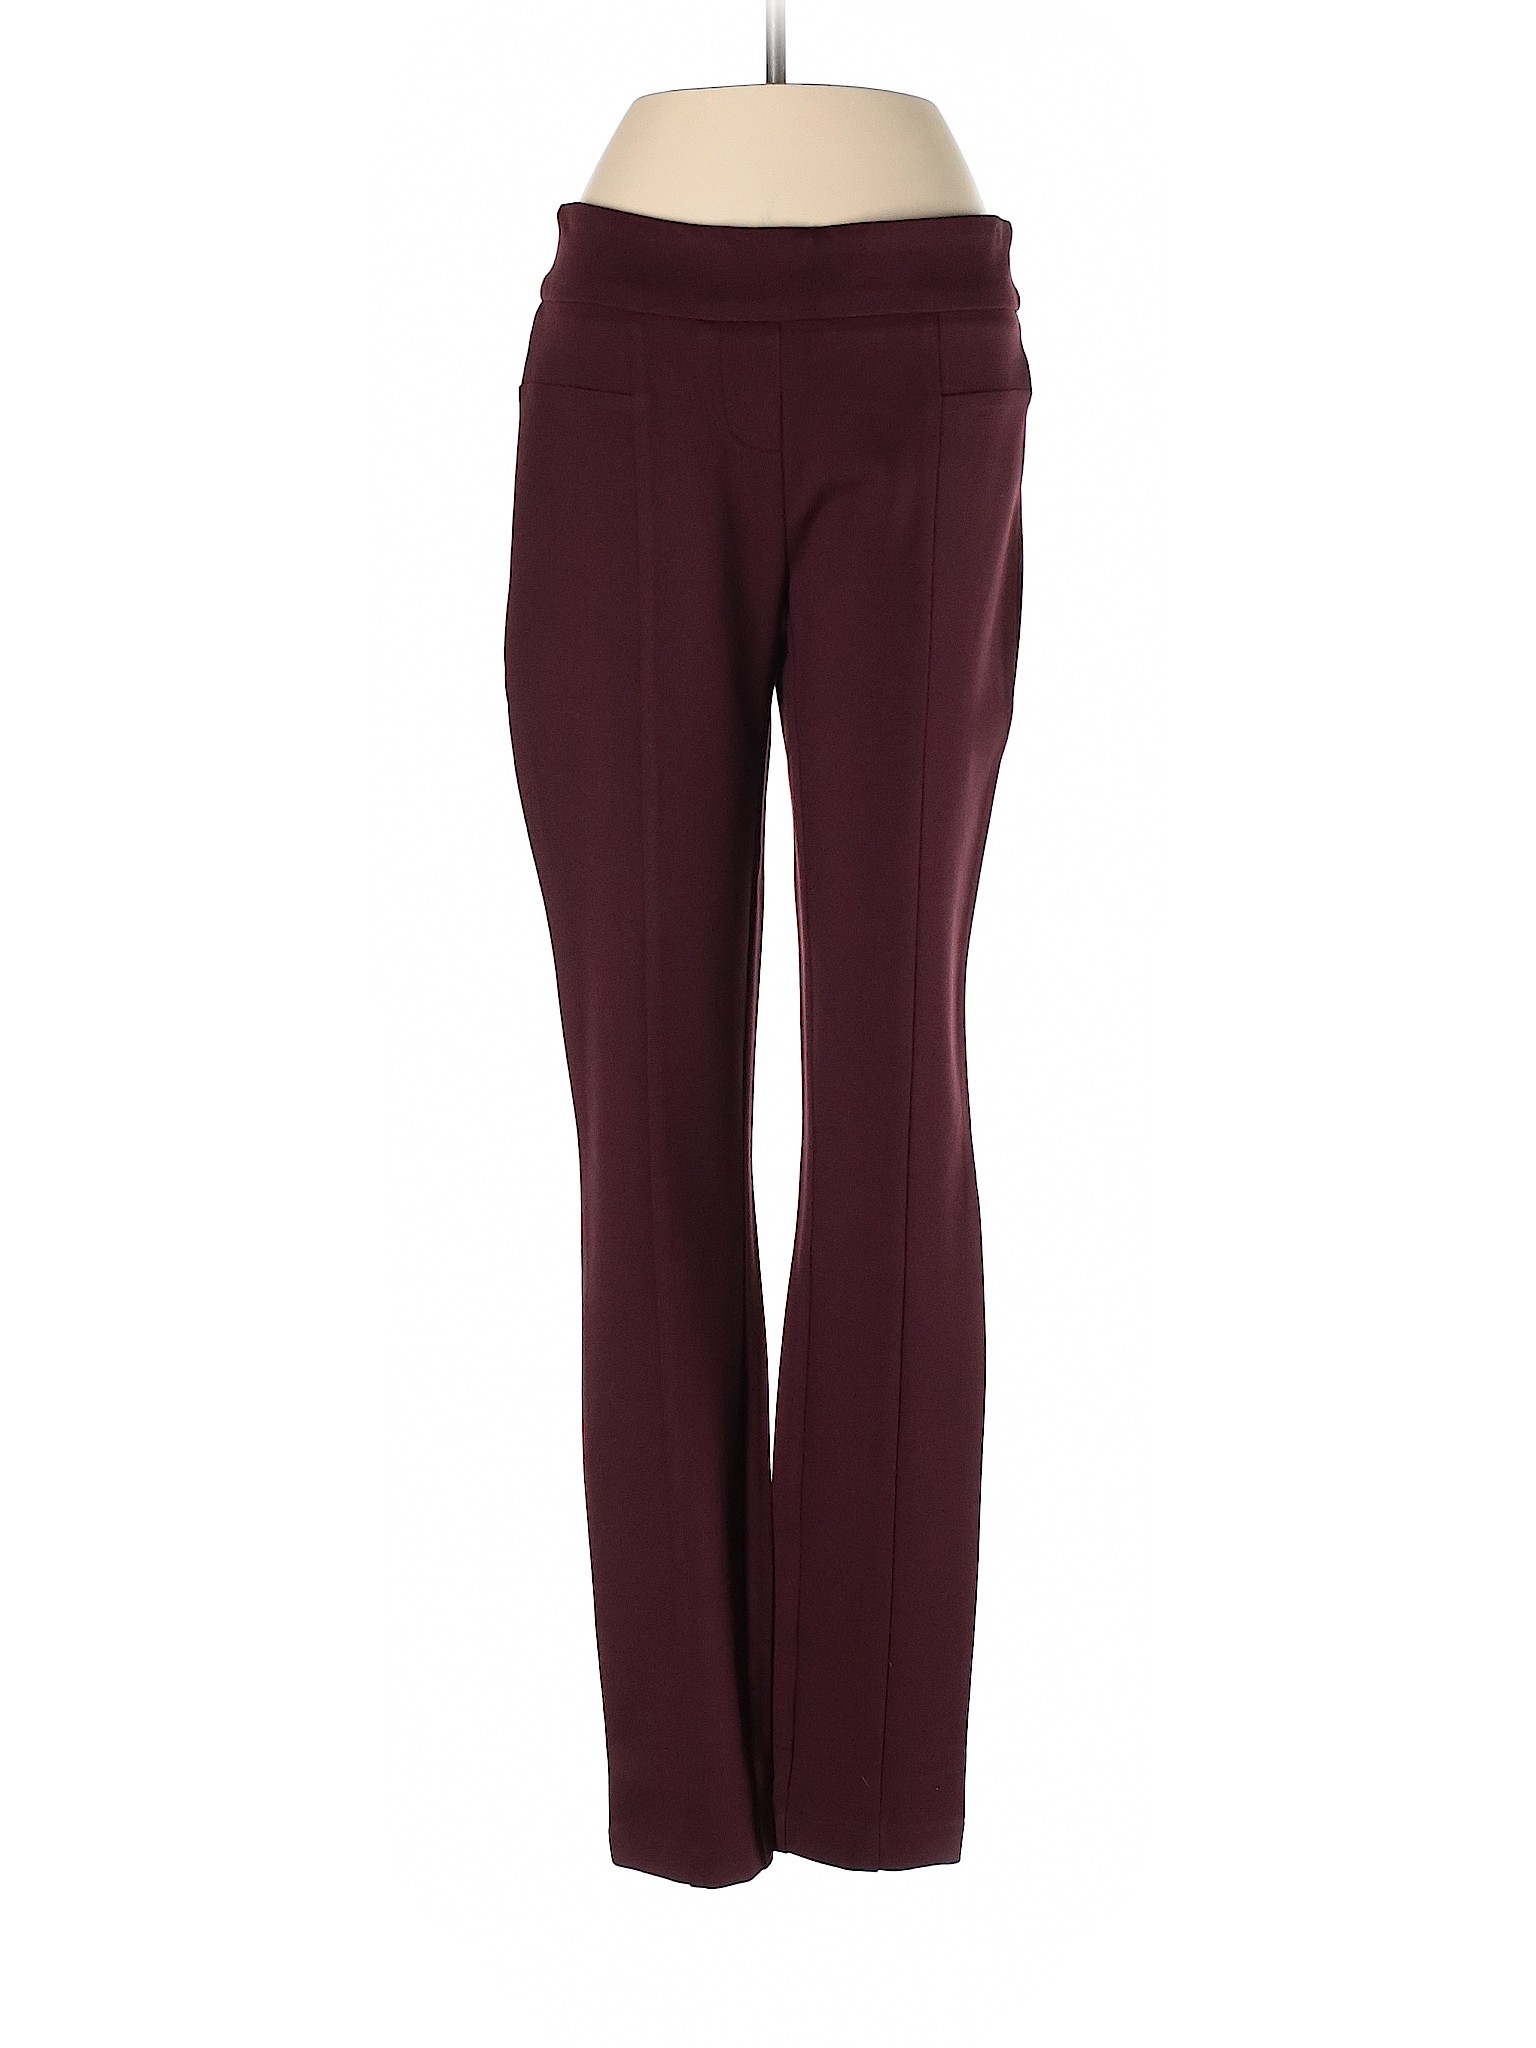 NWT Hilary Radley Women Red Dress Pants XS | eBay